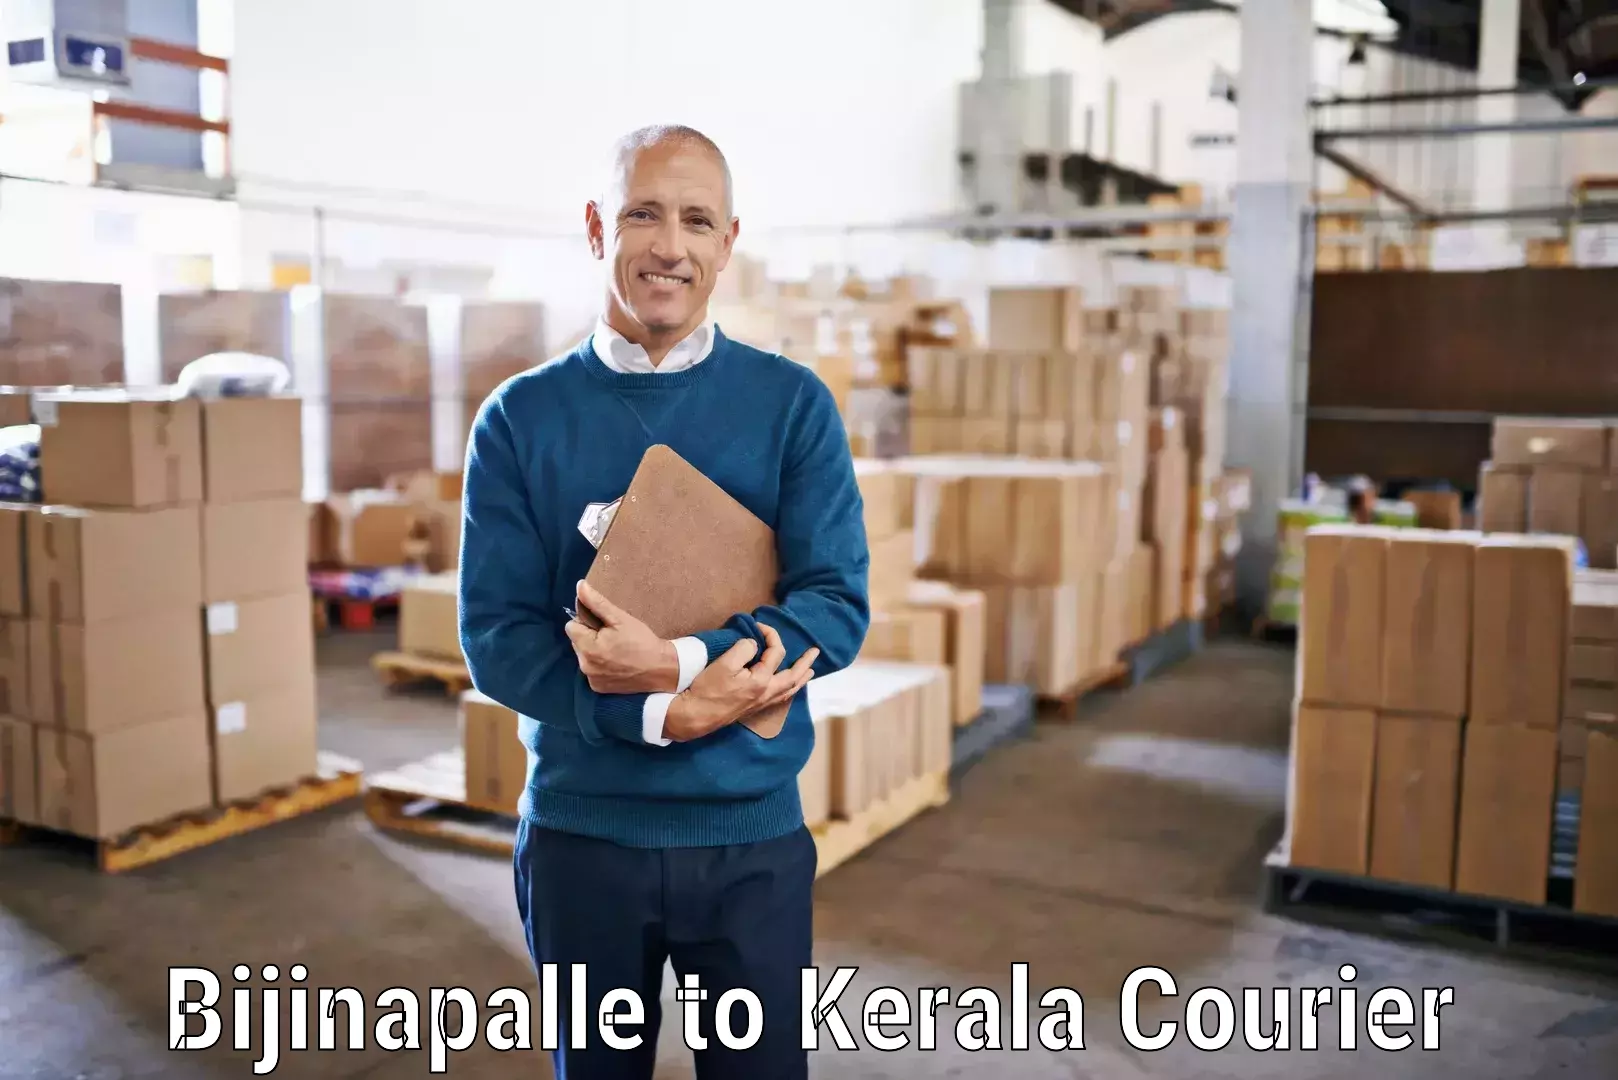 Global parcel delivery Bijinapalle to Trivandrum